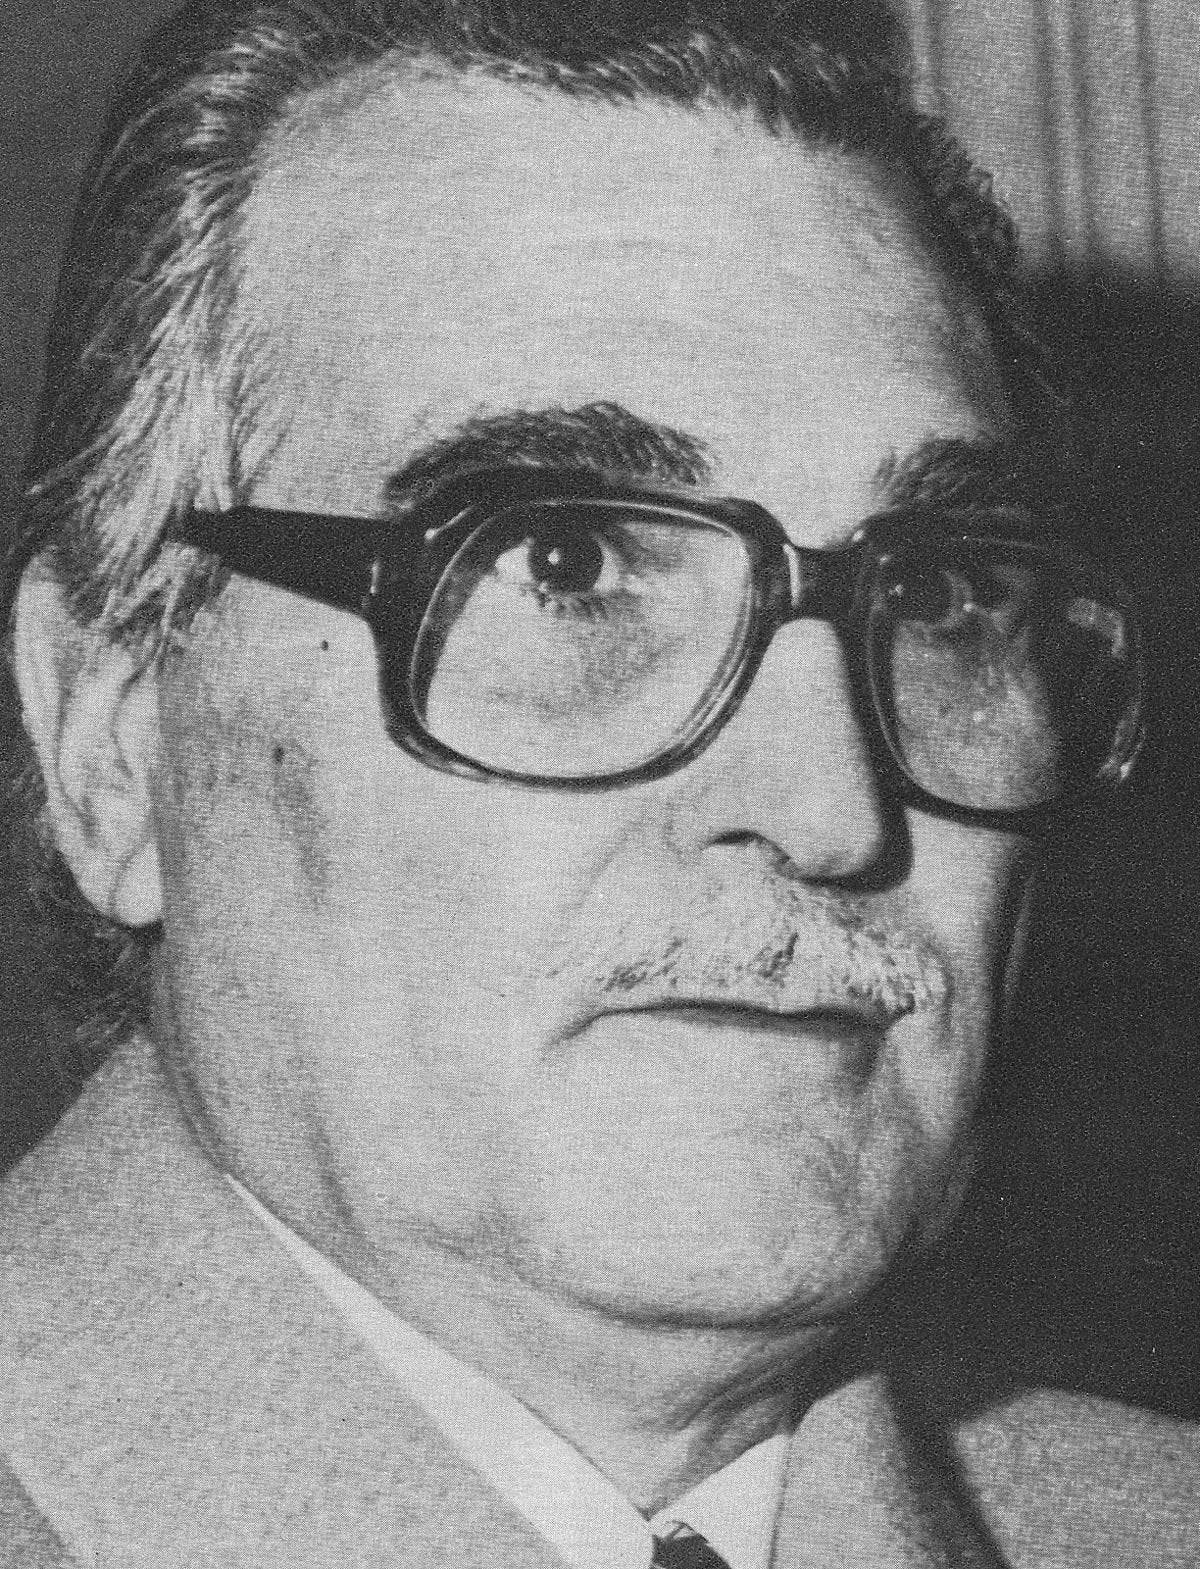 Pietro Musumeci - Wikipedia